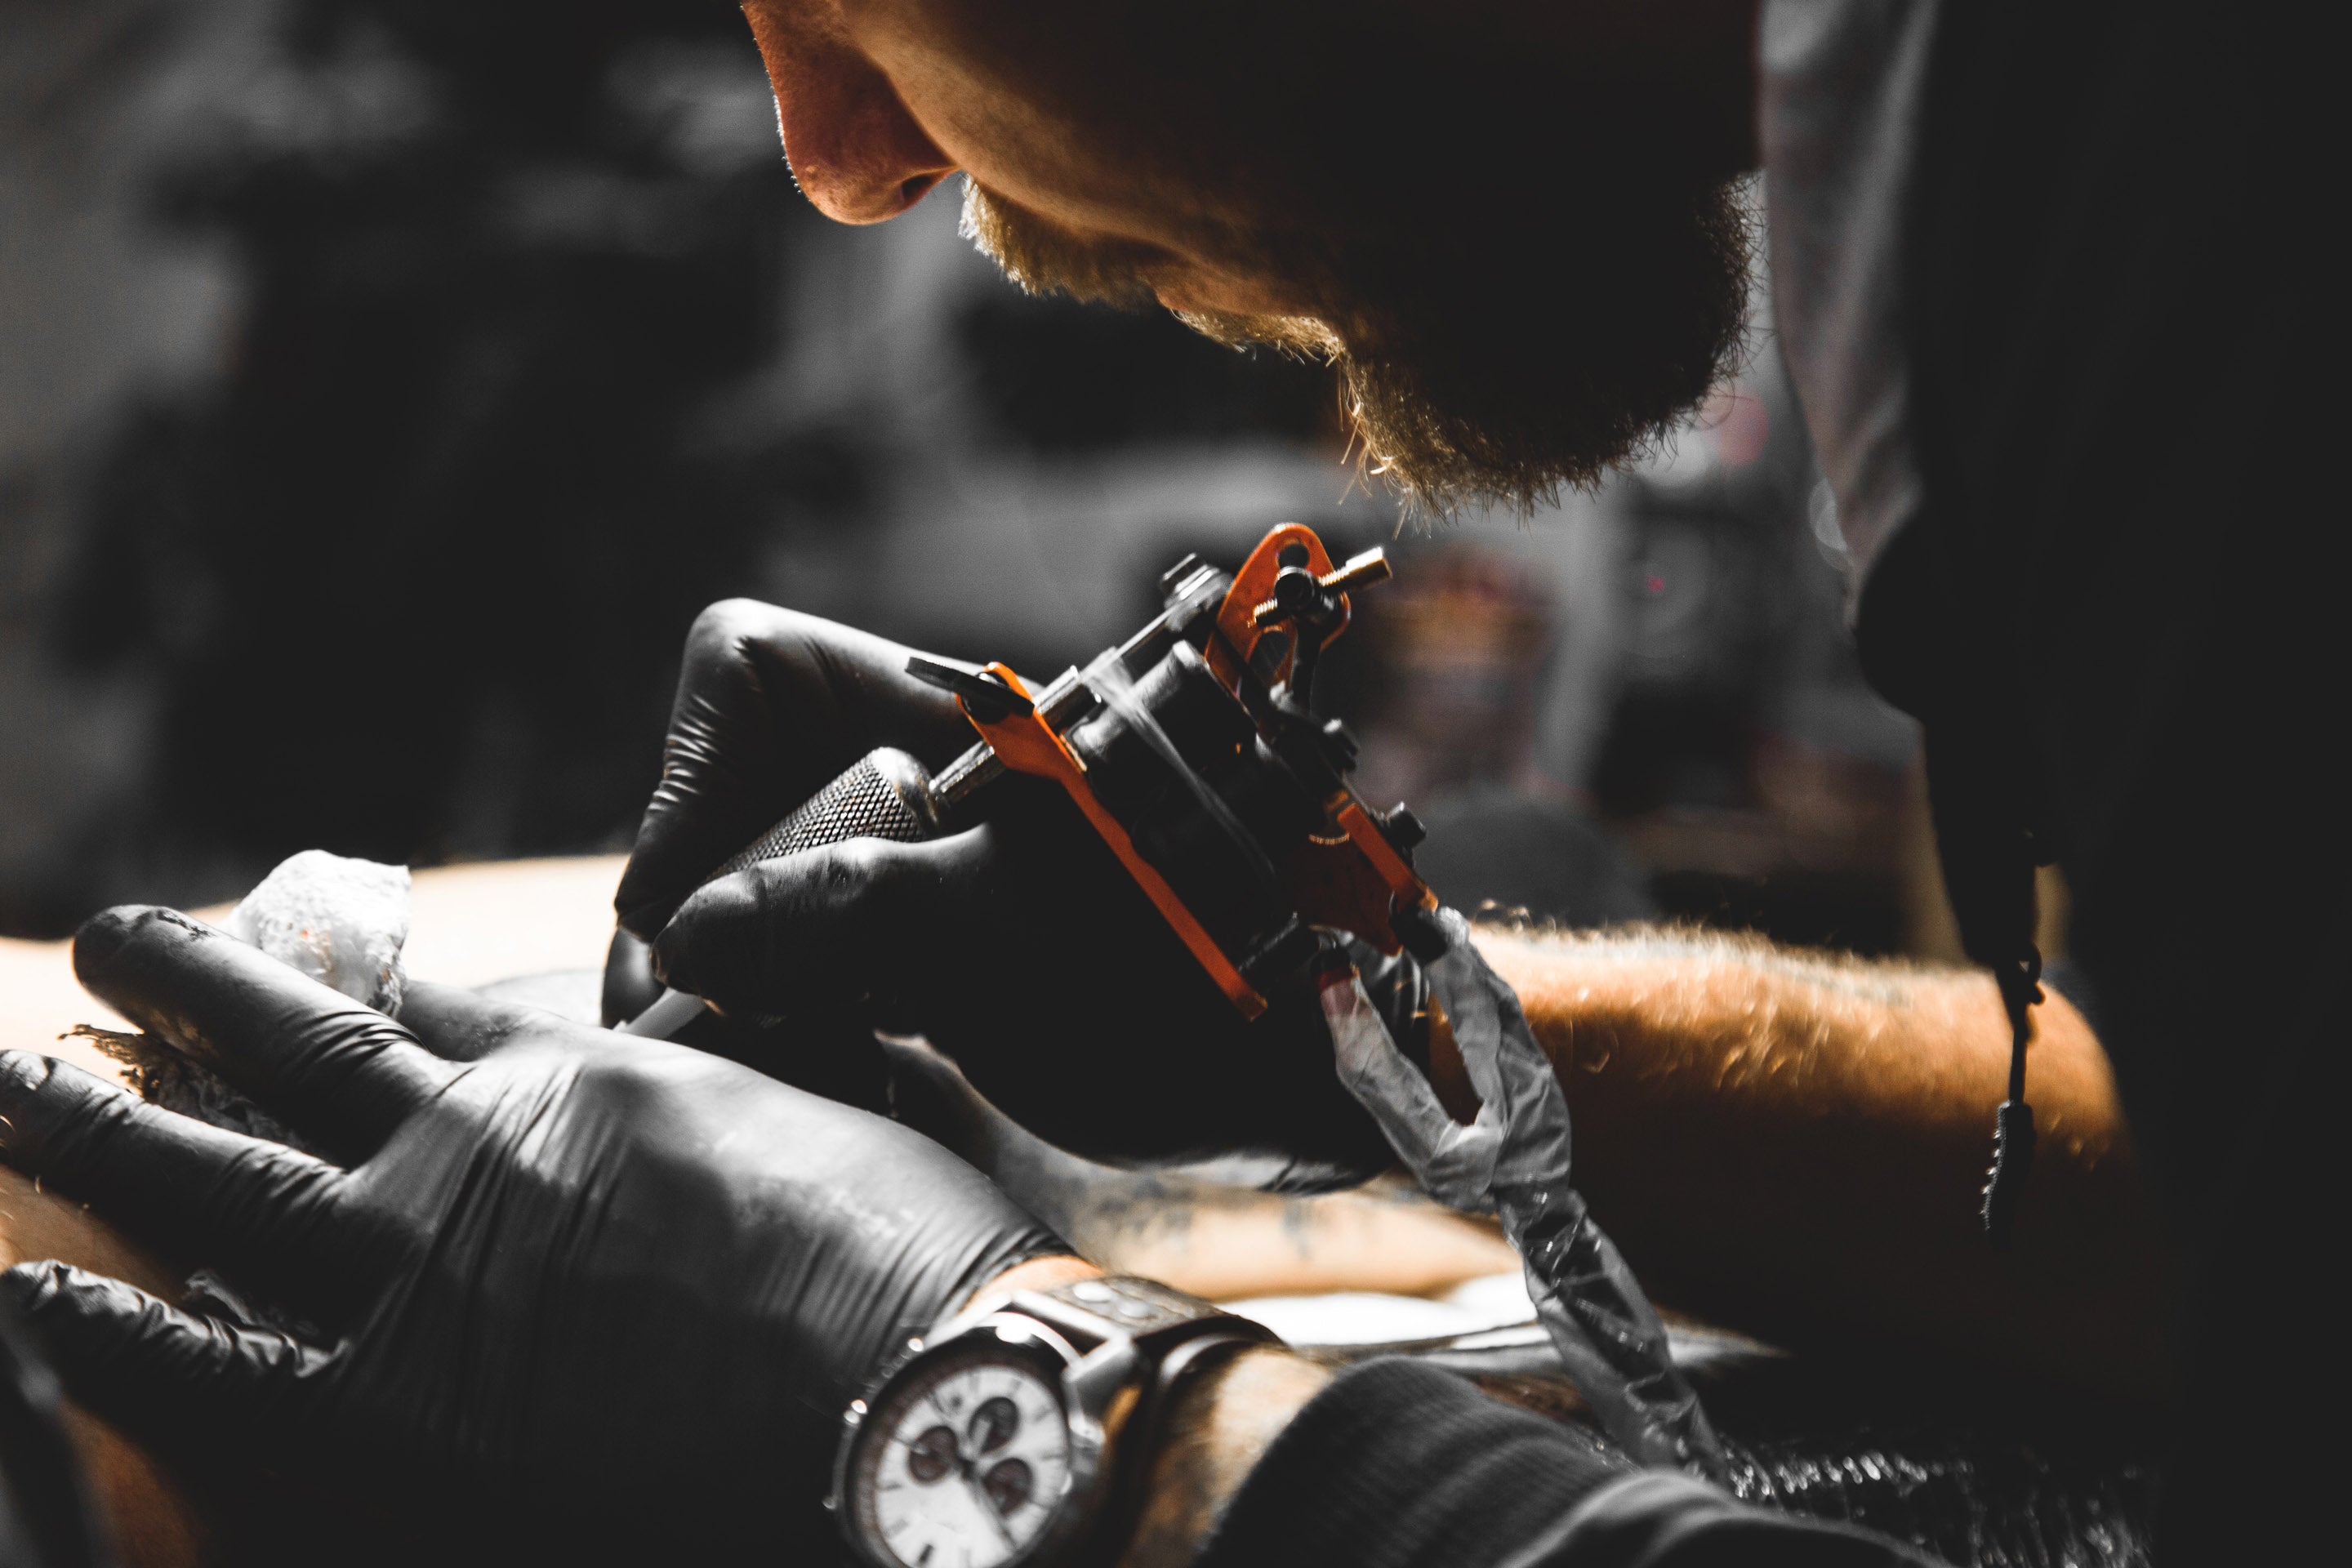 Tattoo artist wearing black gloves tattooing client. 